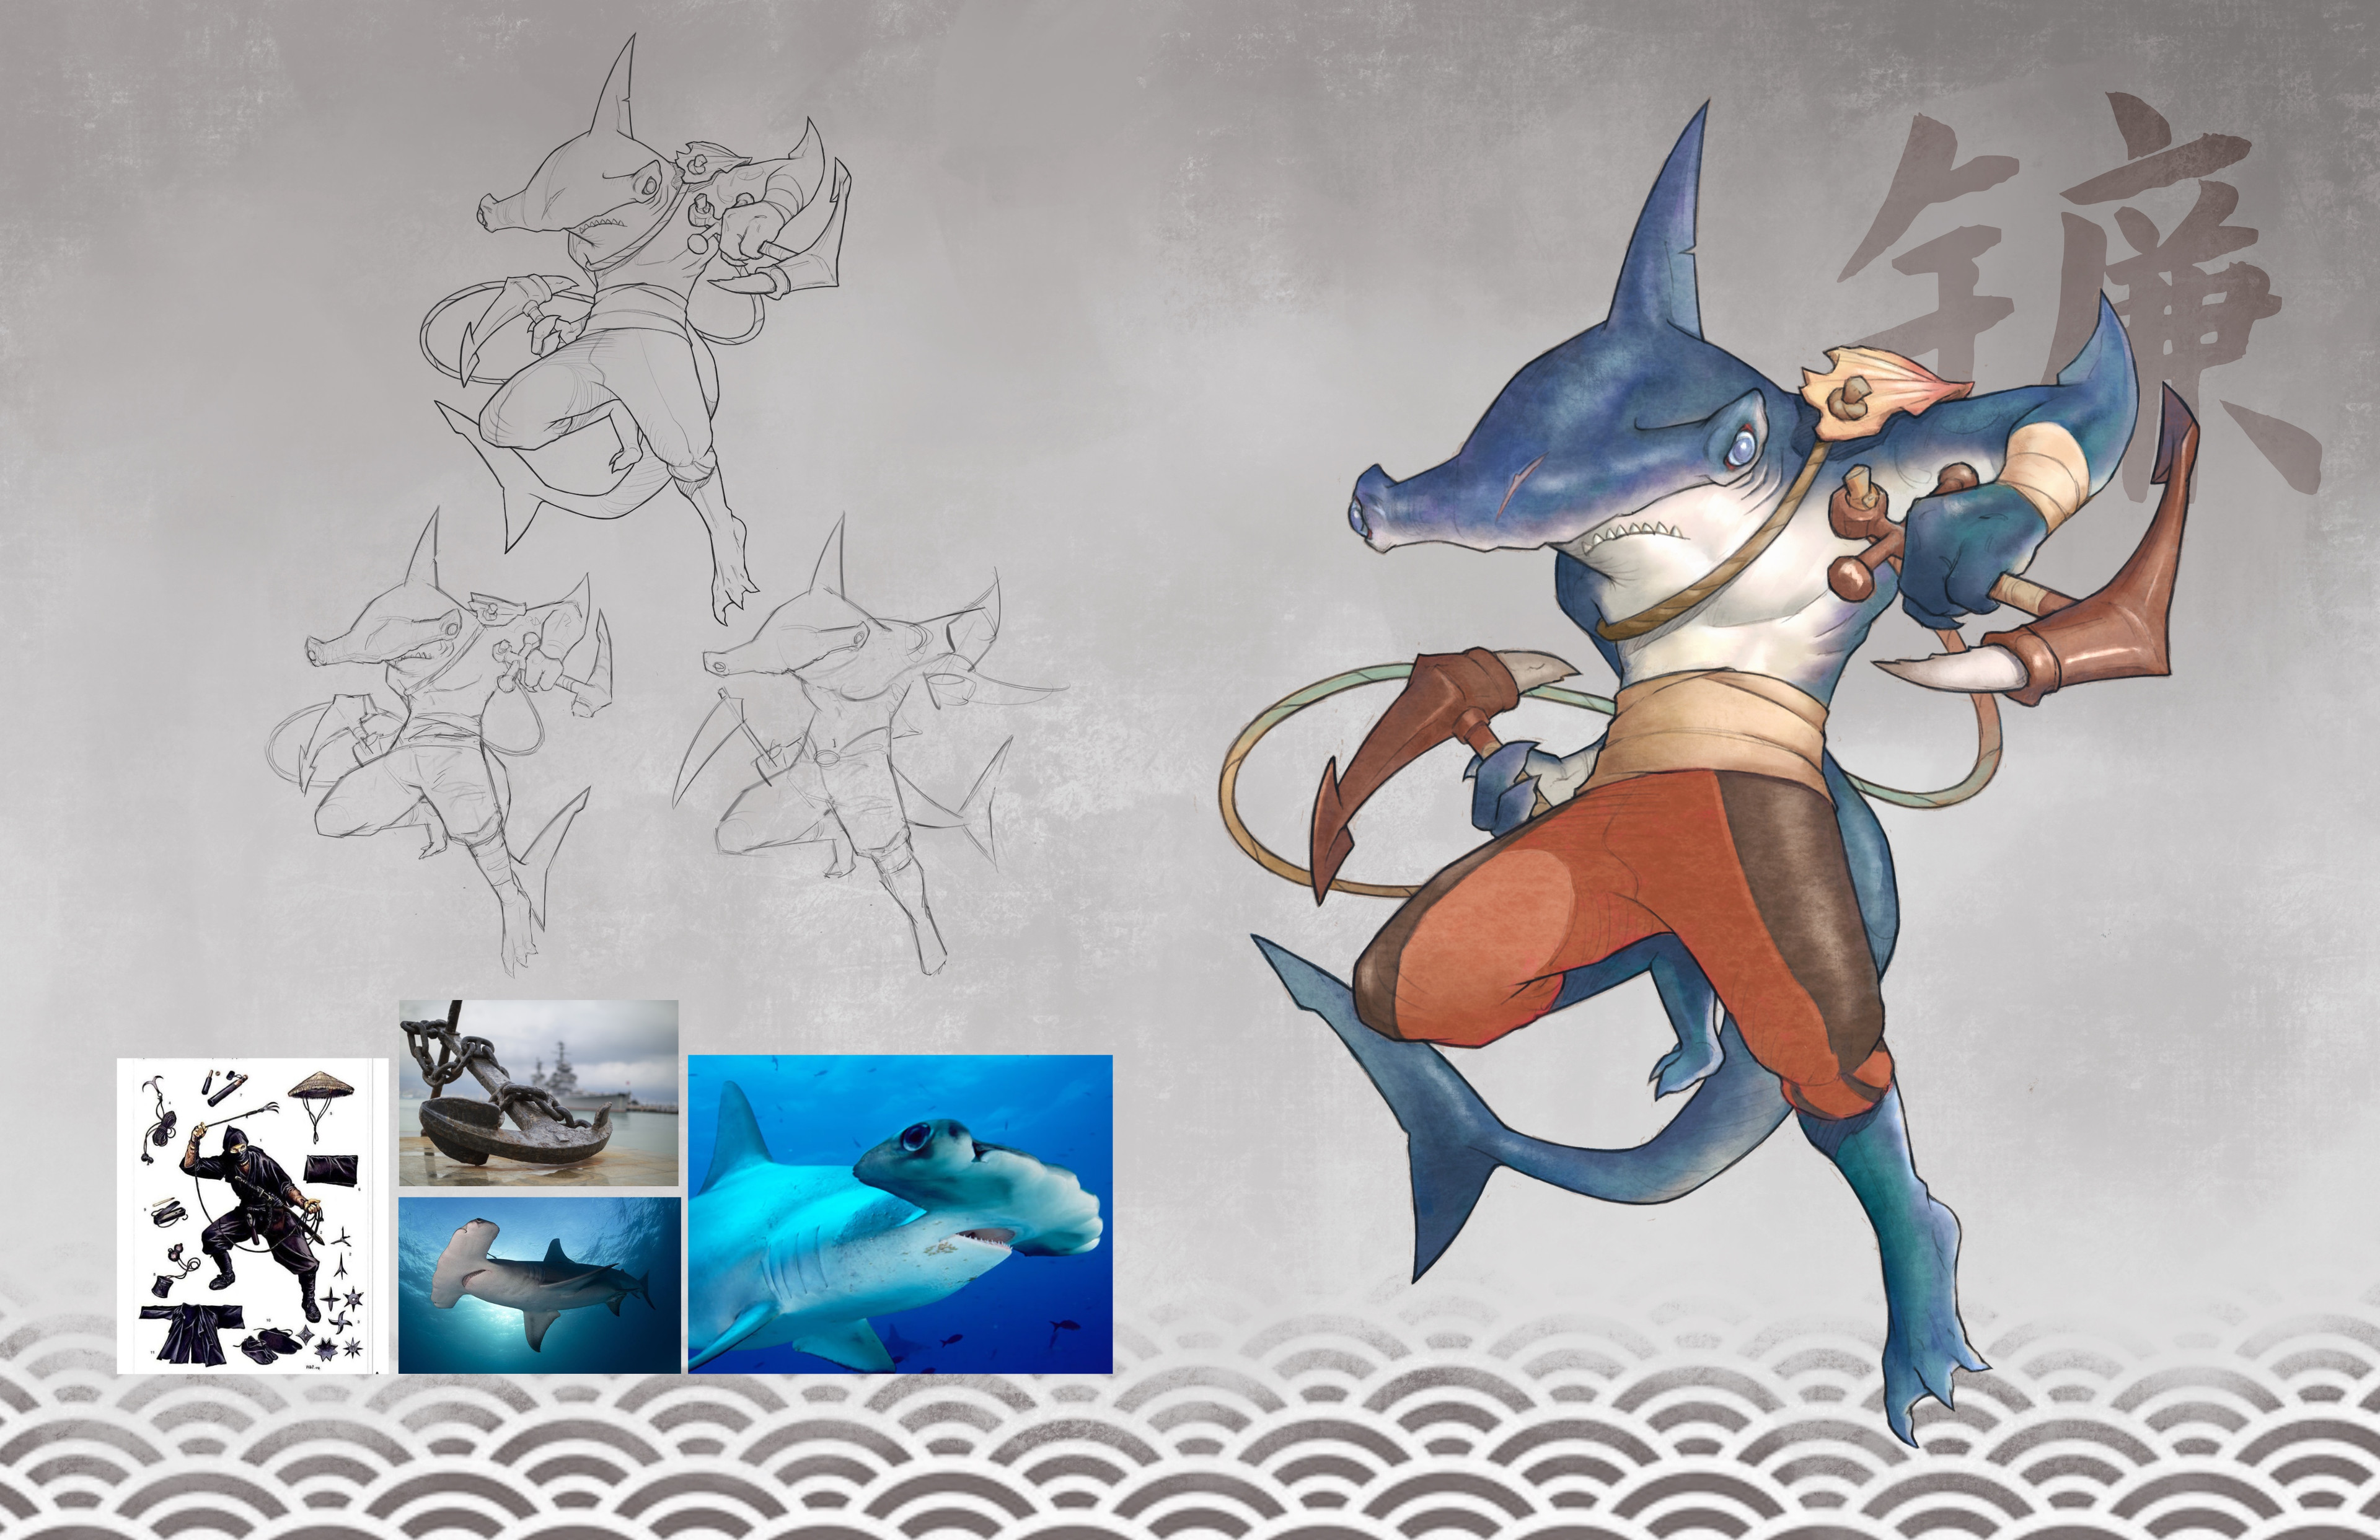 The Assasin - Design based on hammer shark, my favorite kind of shark, and ninja. His weapons are made from anchors and shark teeth. 

刺客 - 设计源于双髻鲨和忍者，武器由船锚和鲨鱼牙齿打造而成。